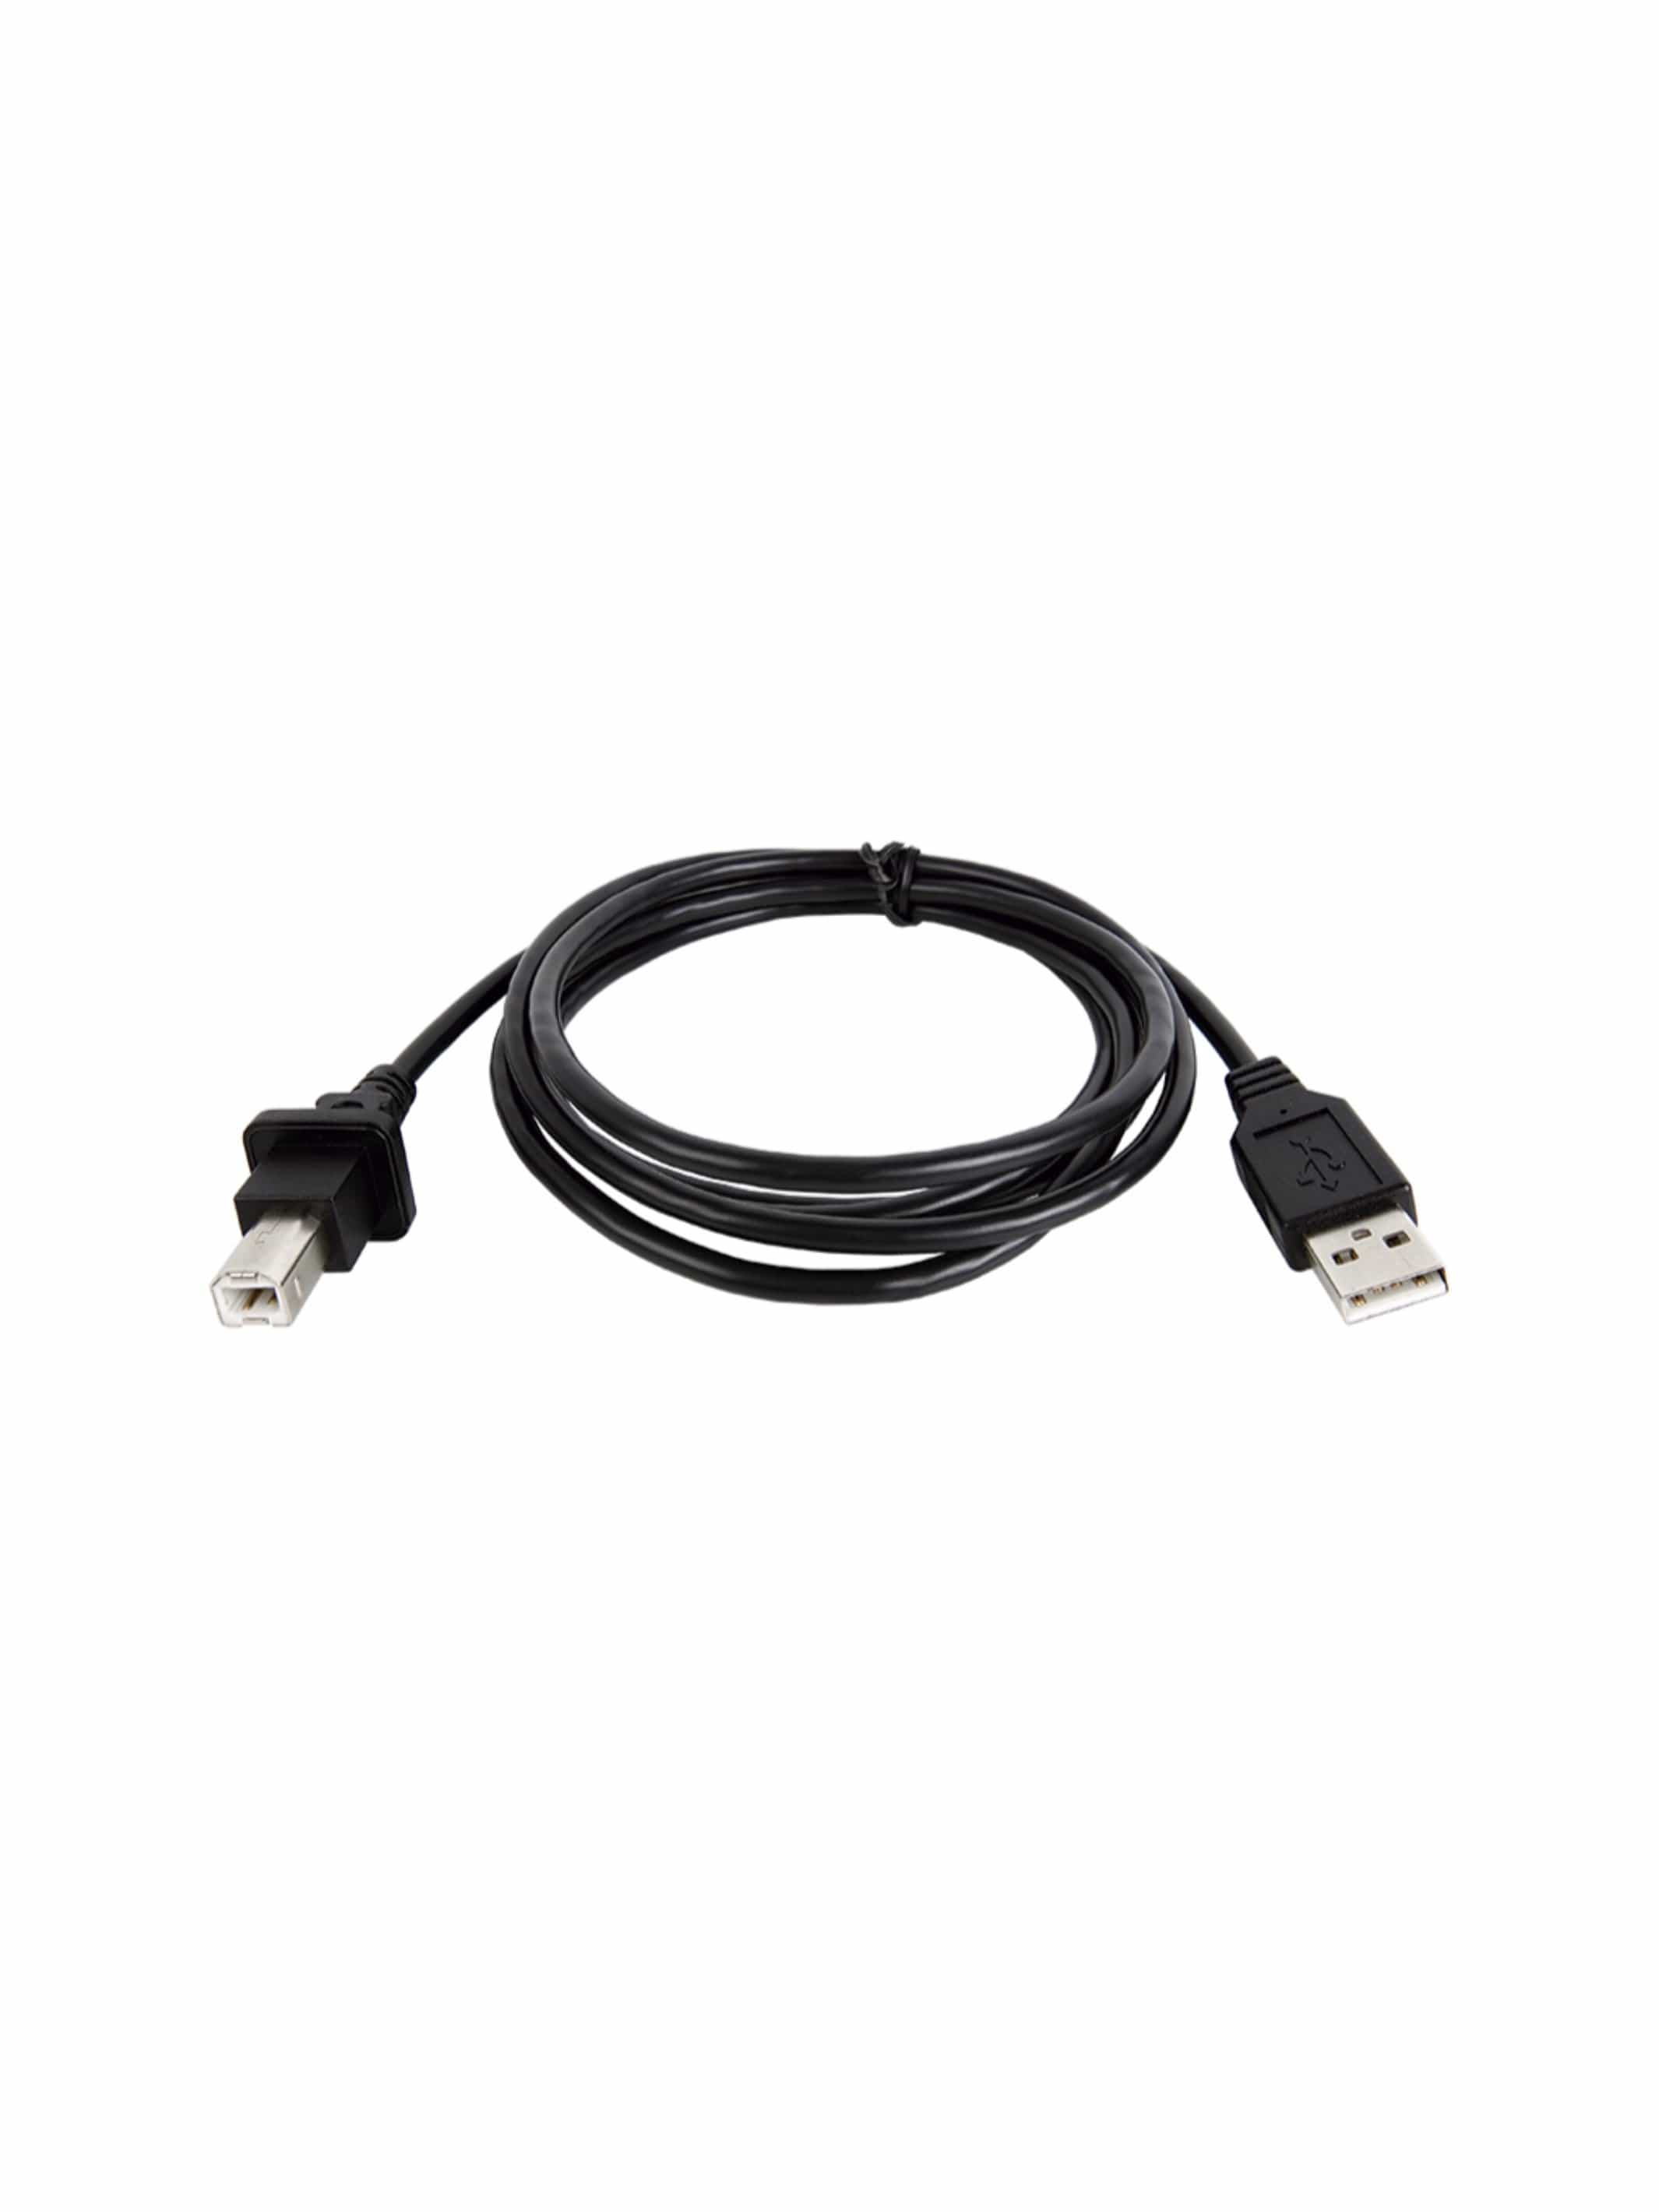 JDC107.9 USB Cable - Jaltest Diagnostic Computer Kit for Commercial Vehicle, Construction & Agriculture Equipment